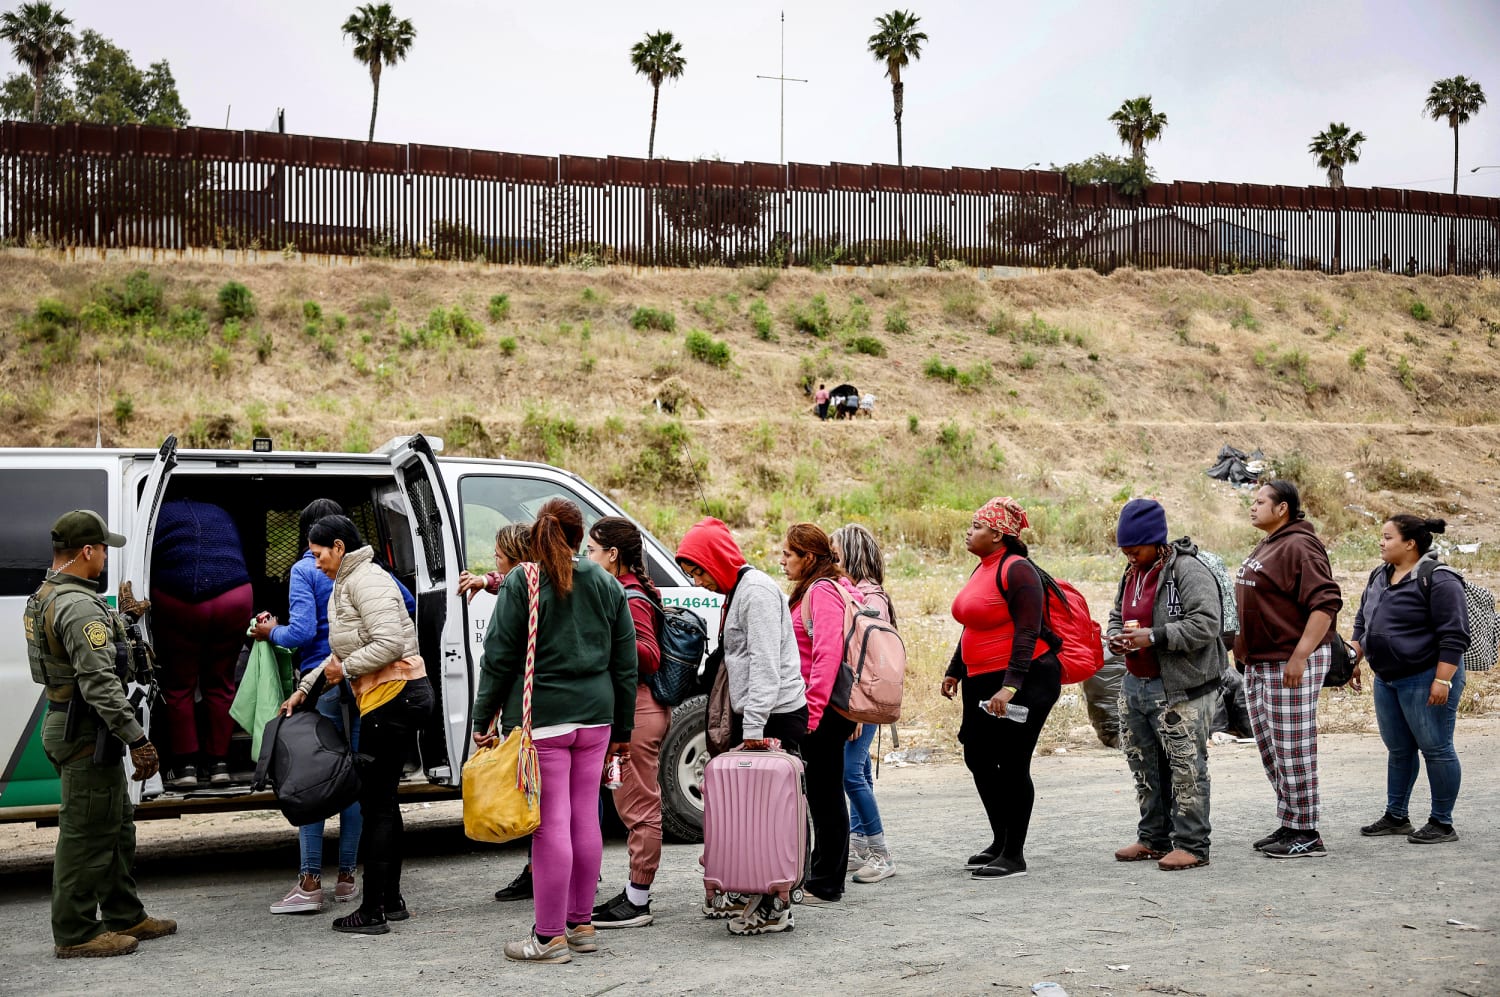 Migrant border crossings hit lowest point since Biden took office despite surge fears